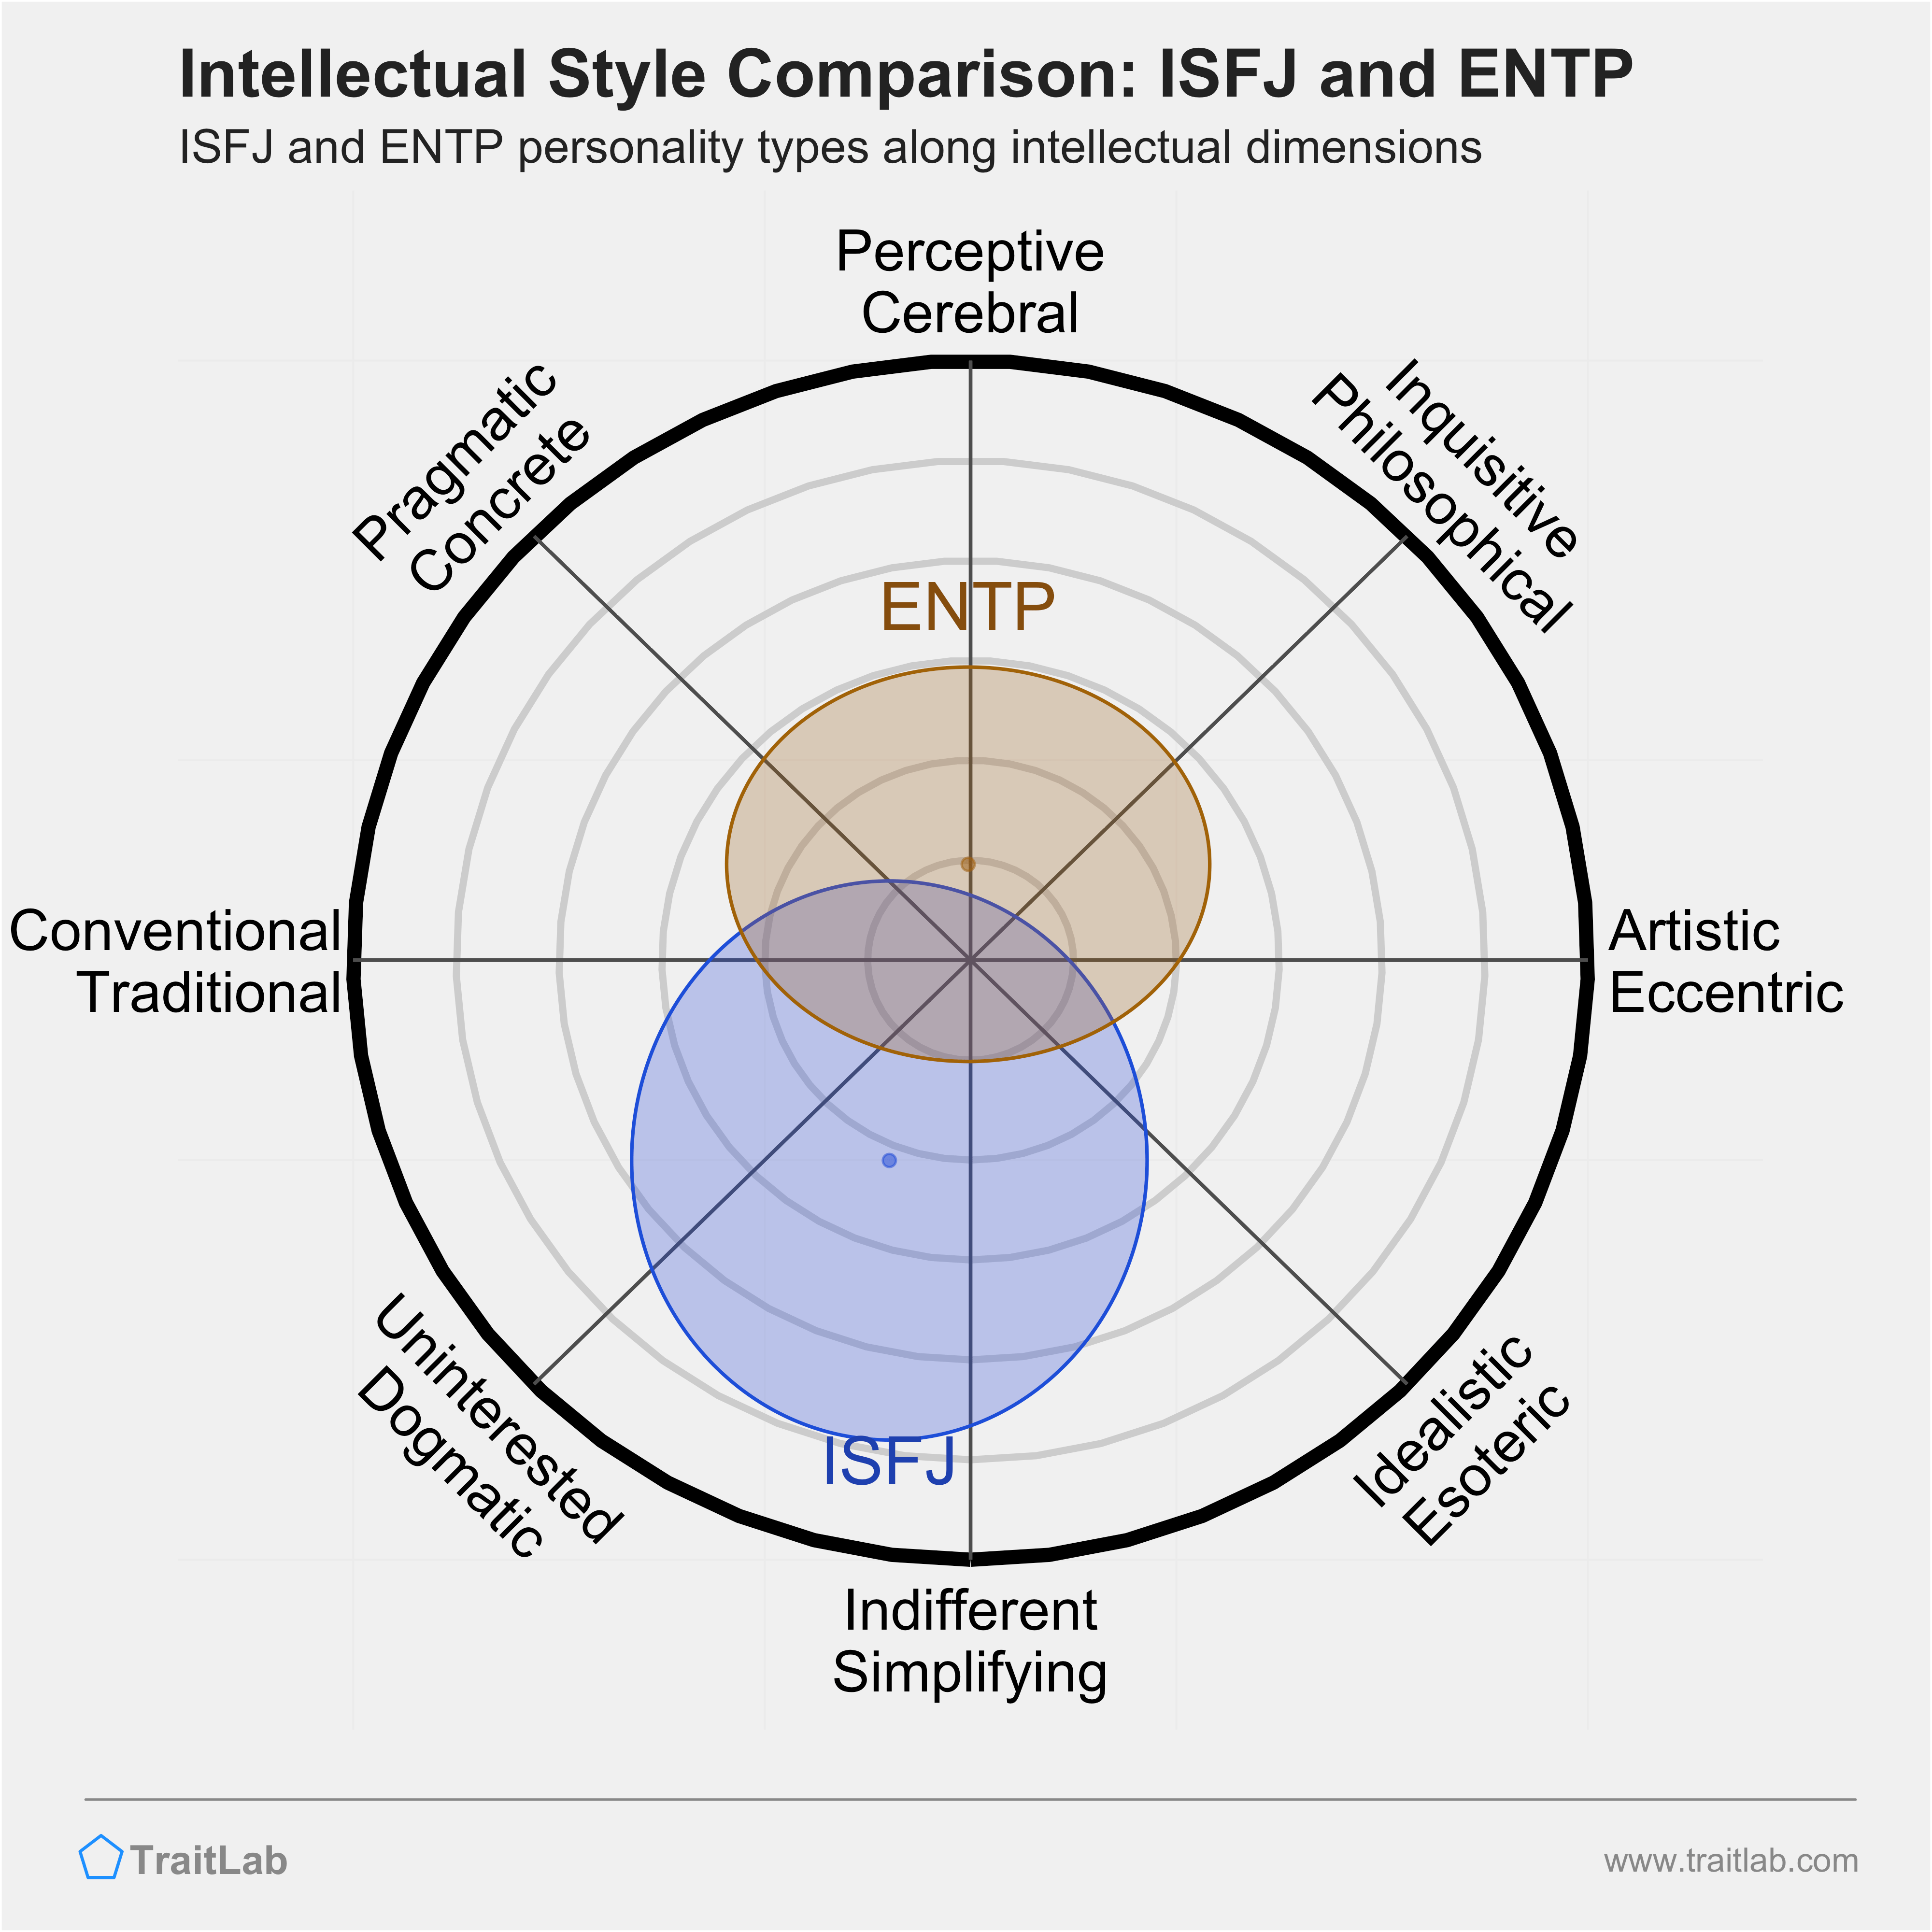 ISFJ and ENTP comparison across intellectual dimensions